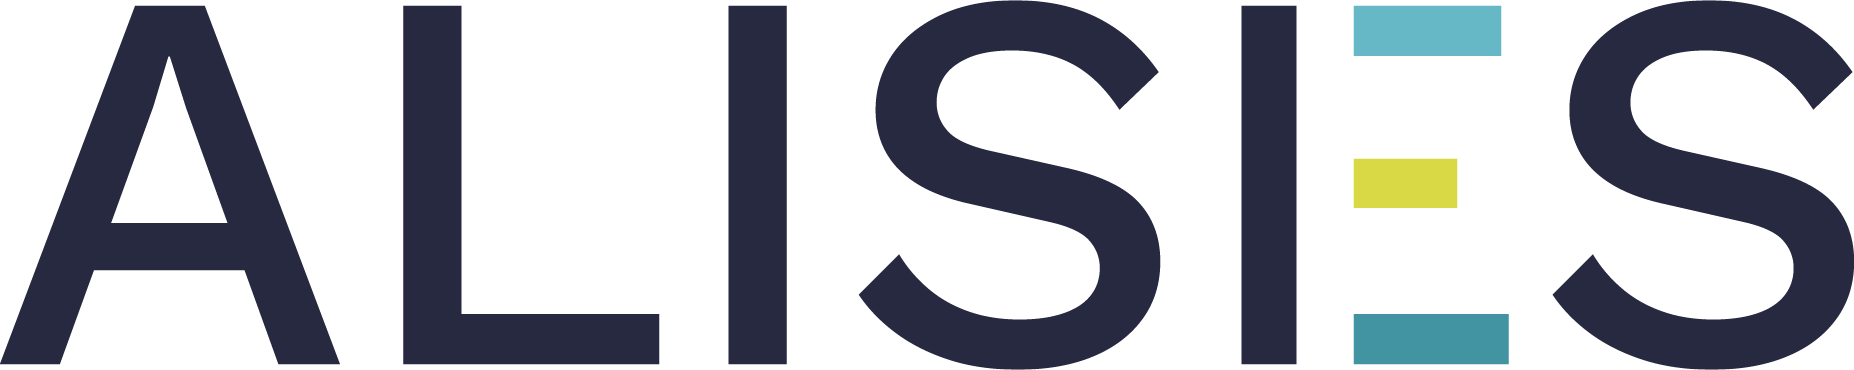 Alises logo